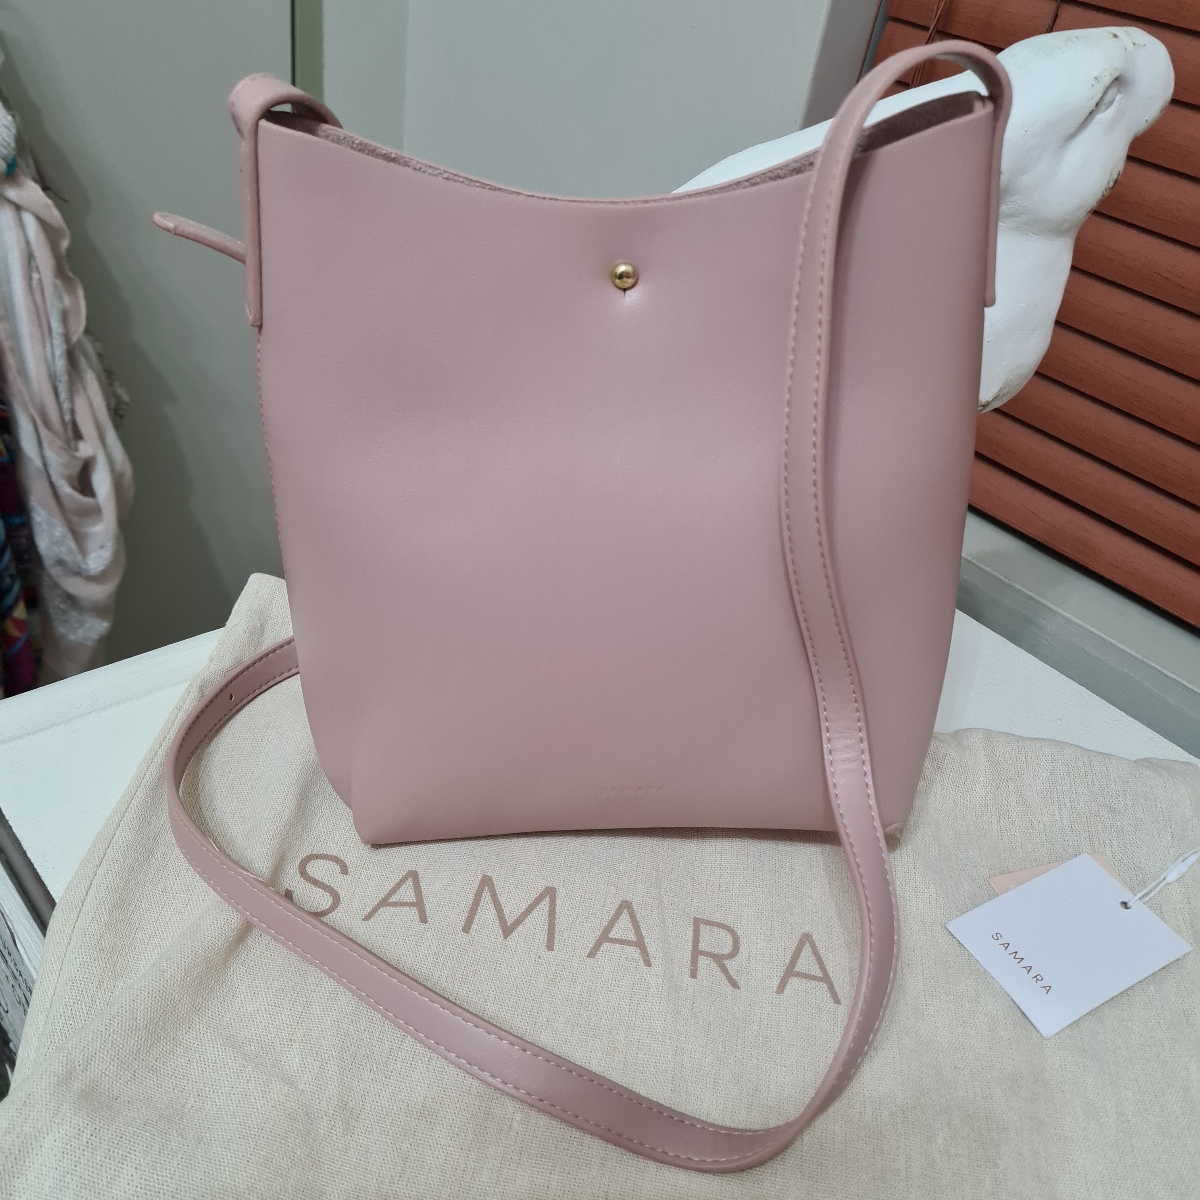 SAMARA, Bags, Samara Shoulder Bag